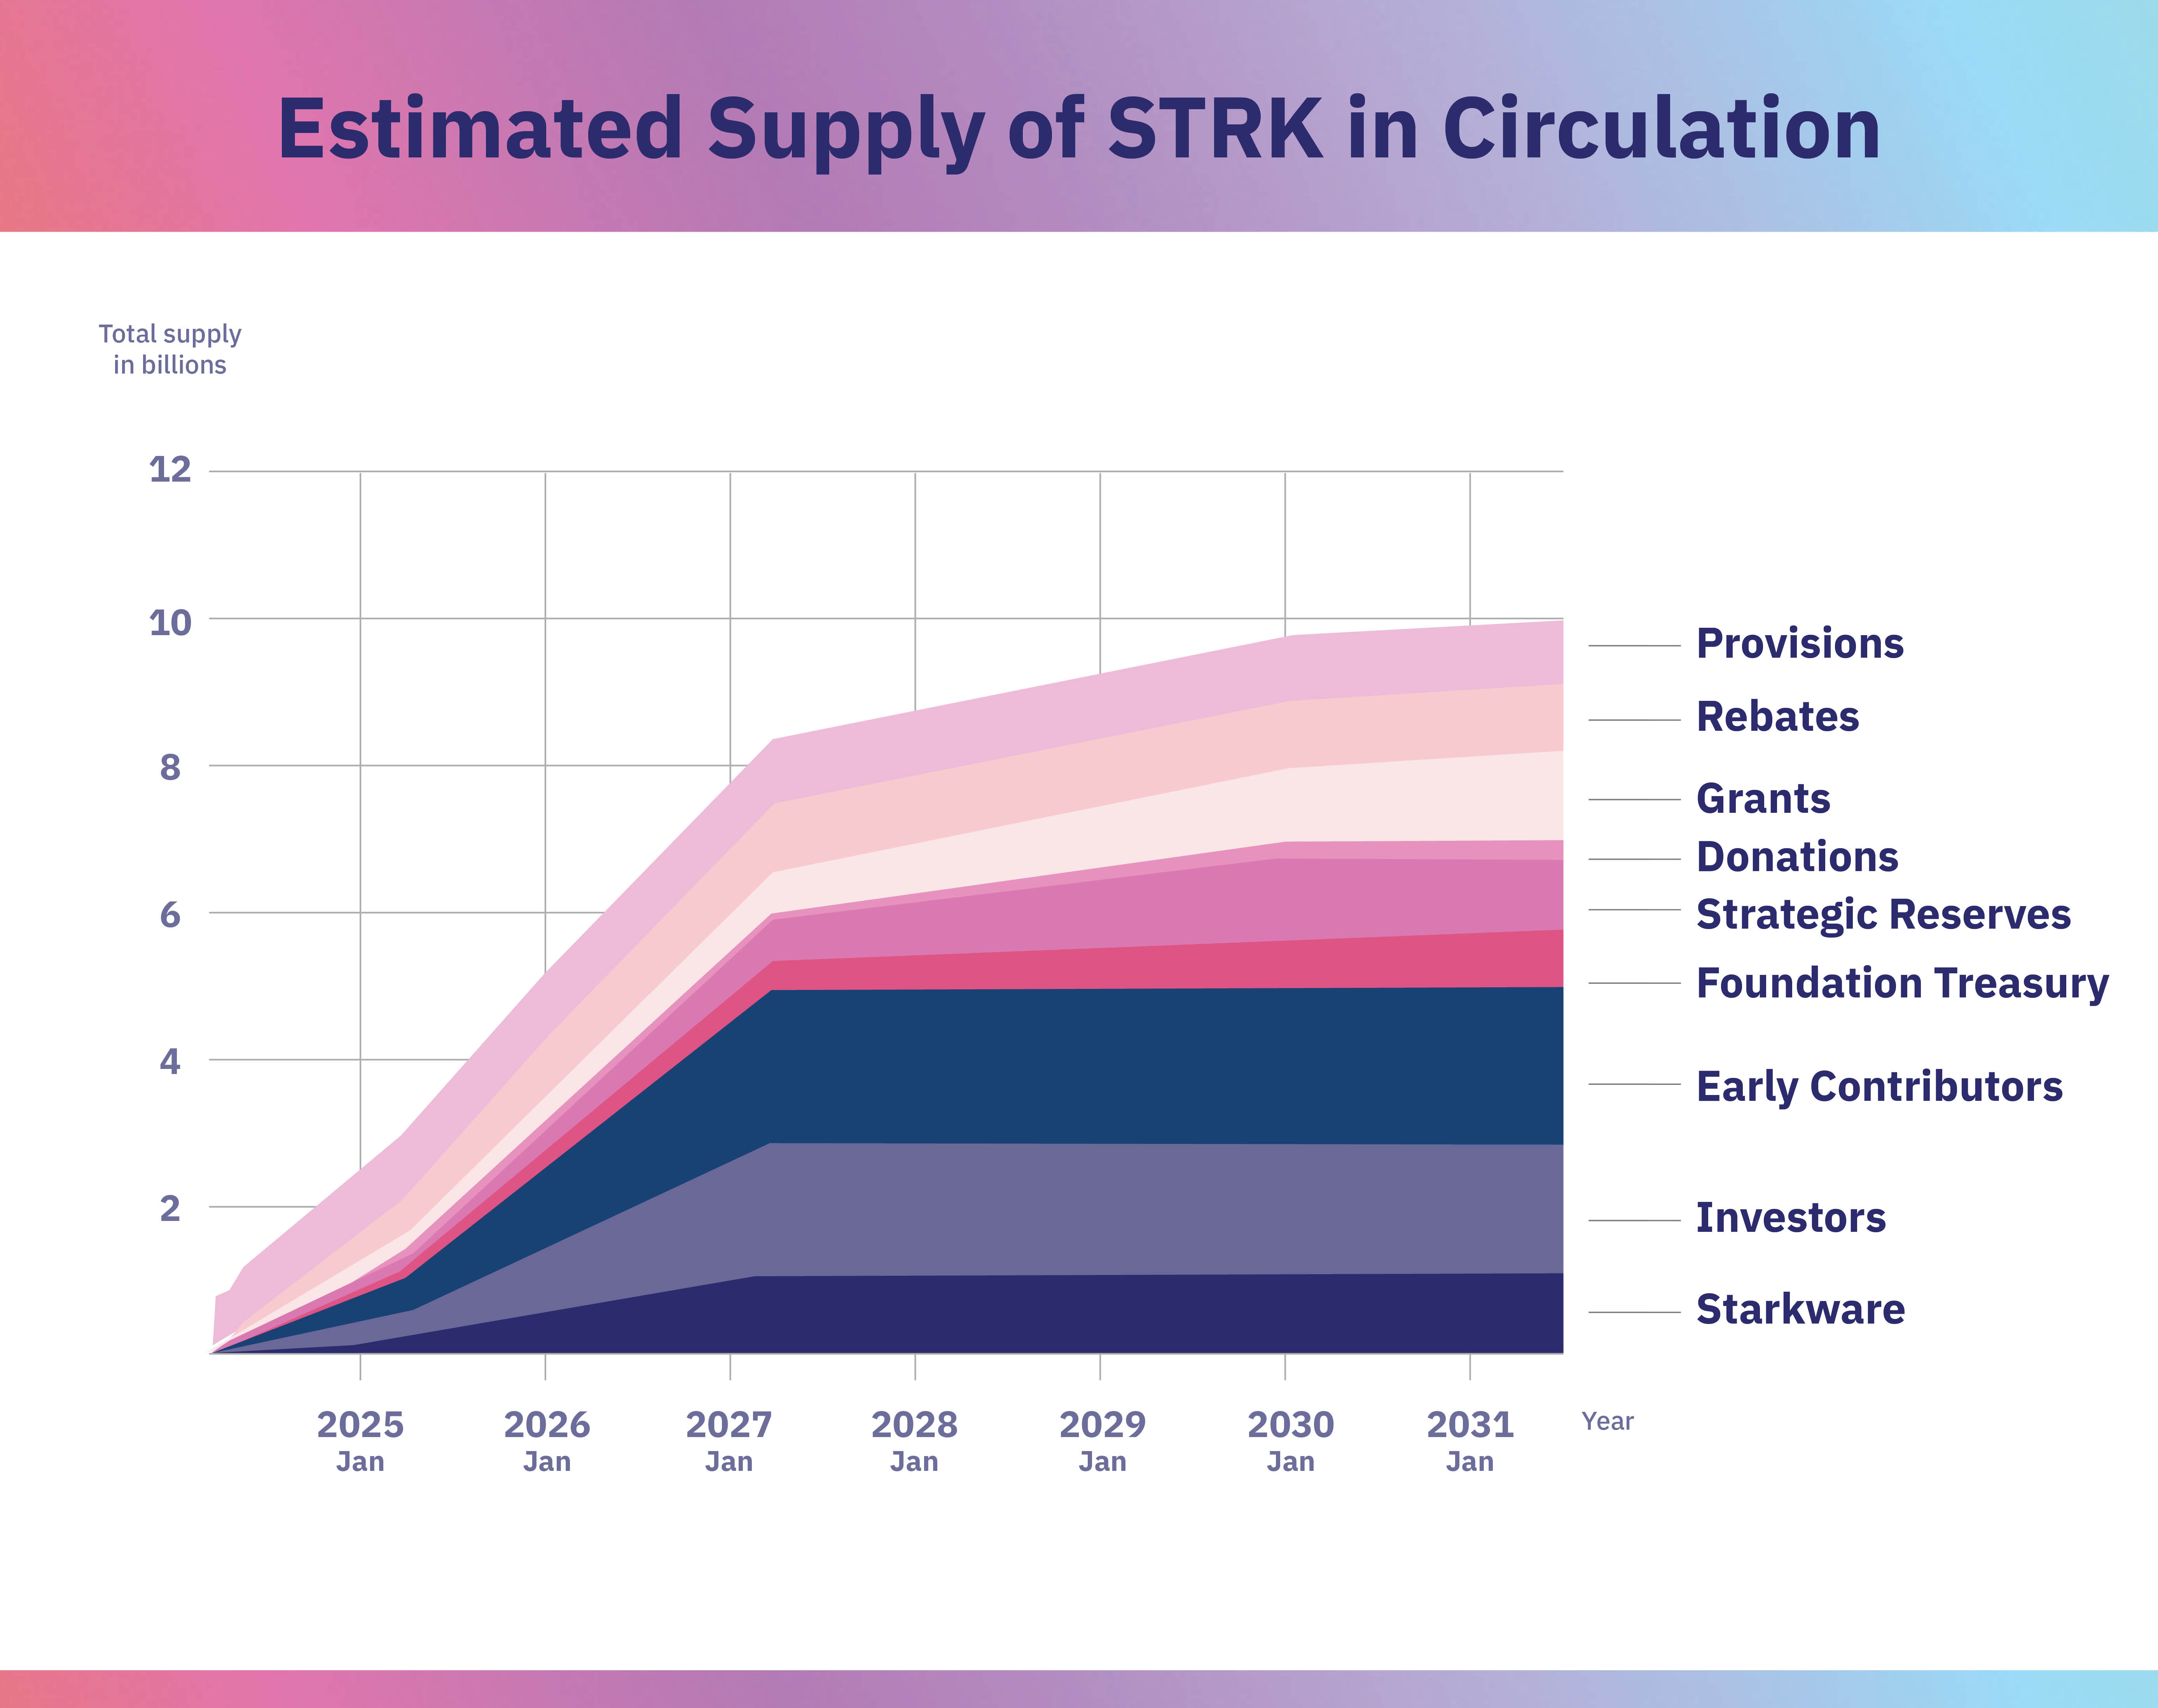 Estimated supply of STRK in circulation